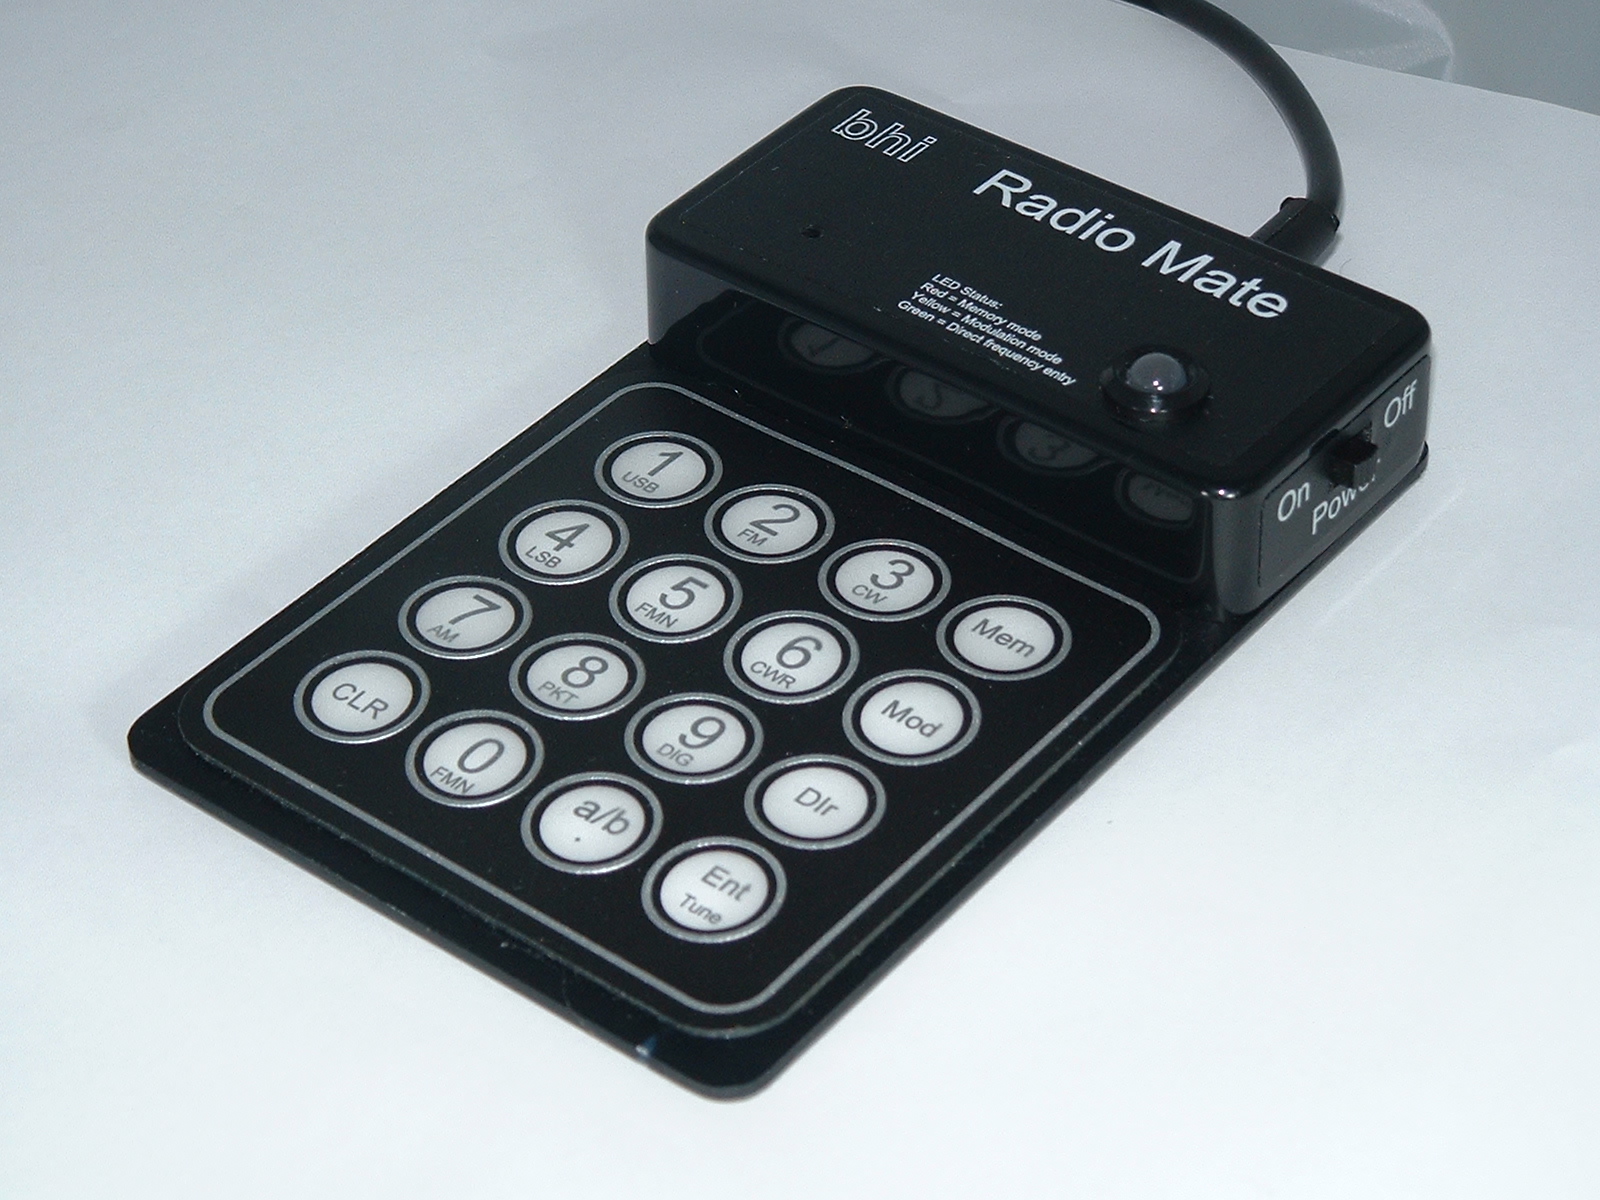 Radio Mate compact Keypad for Yaesu FT-817, FT-857, FT-897